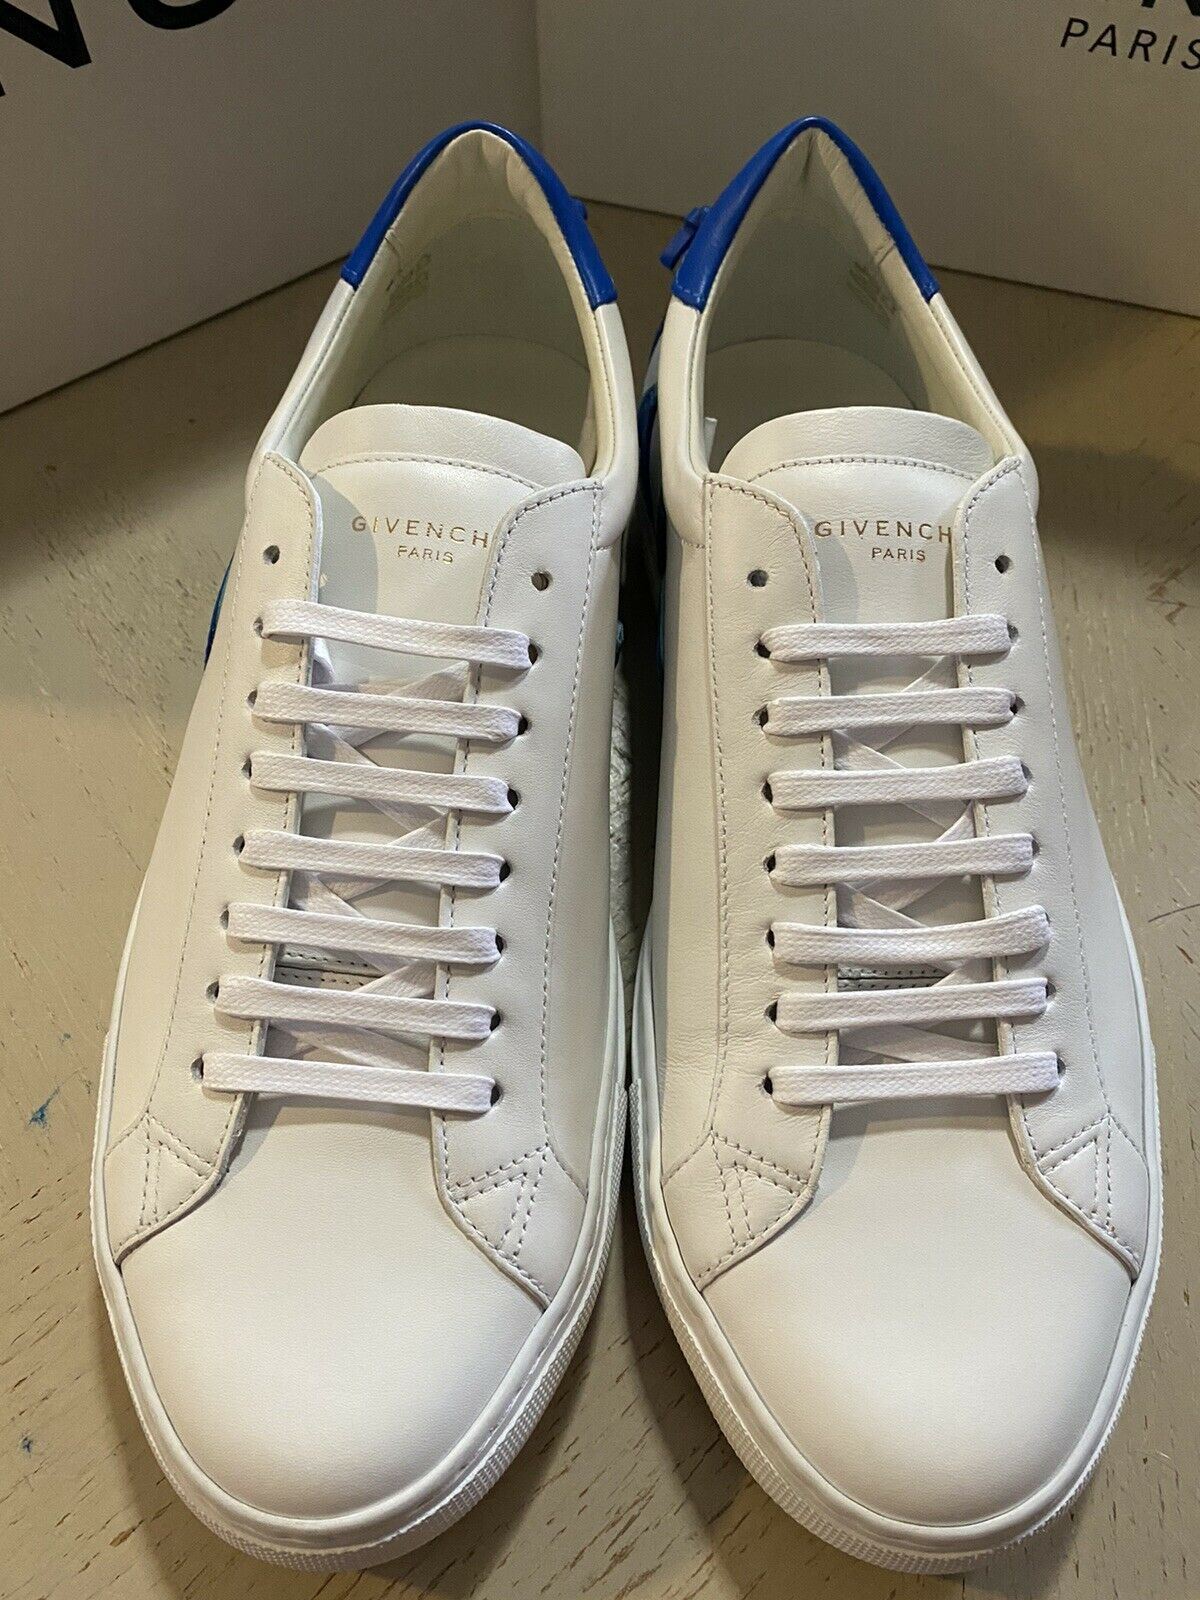 NIB Givenchy Herren Leder Urban Street Sneakers Schuhe Weiß/Blau 9 US / 42 EU